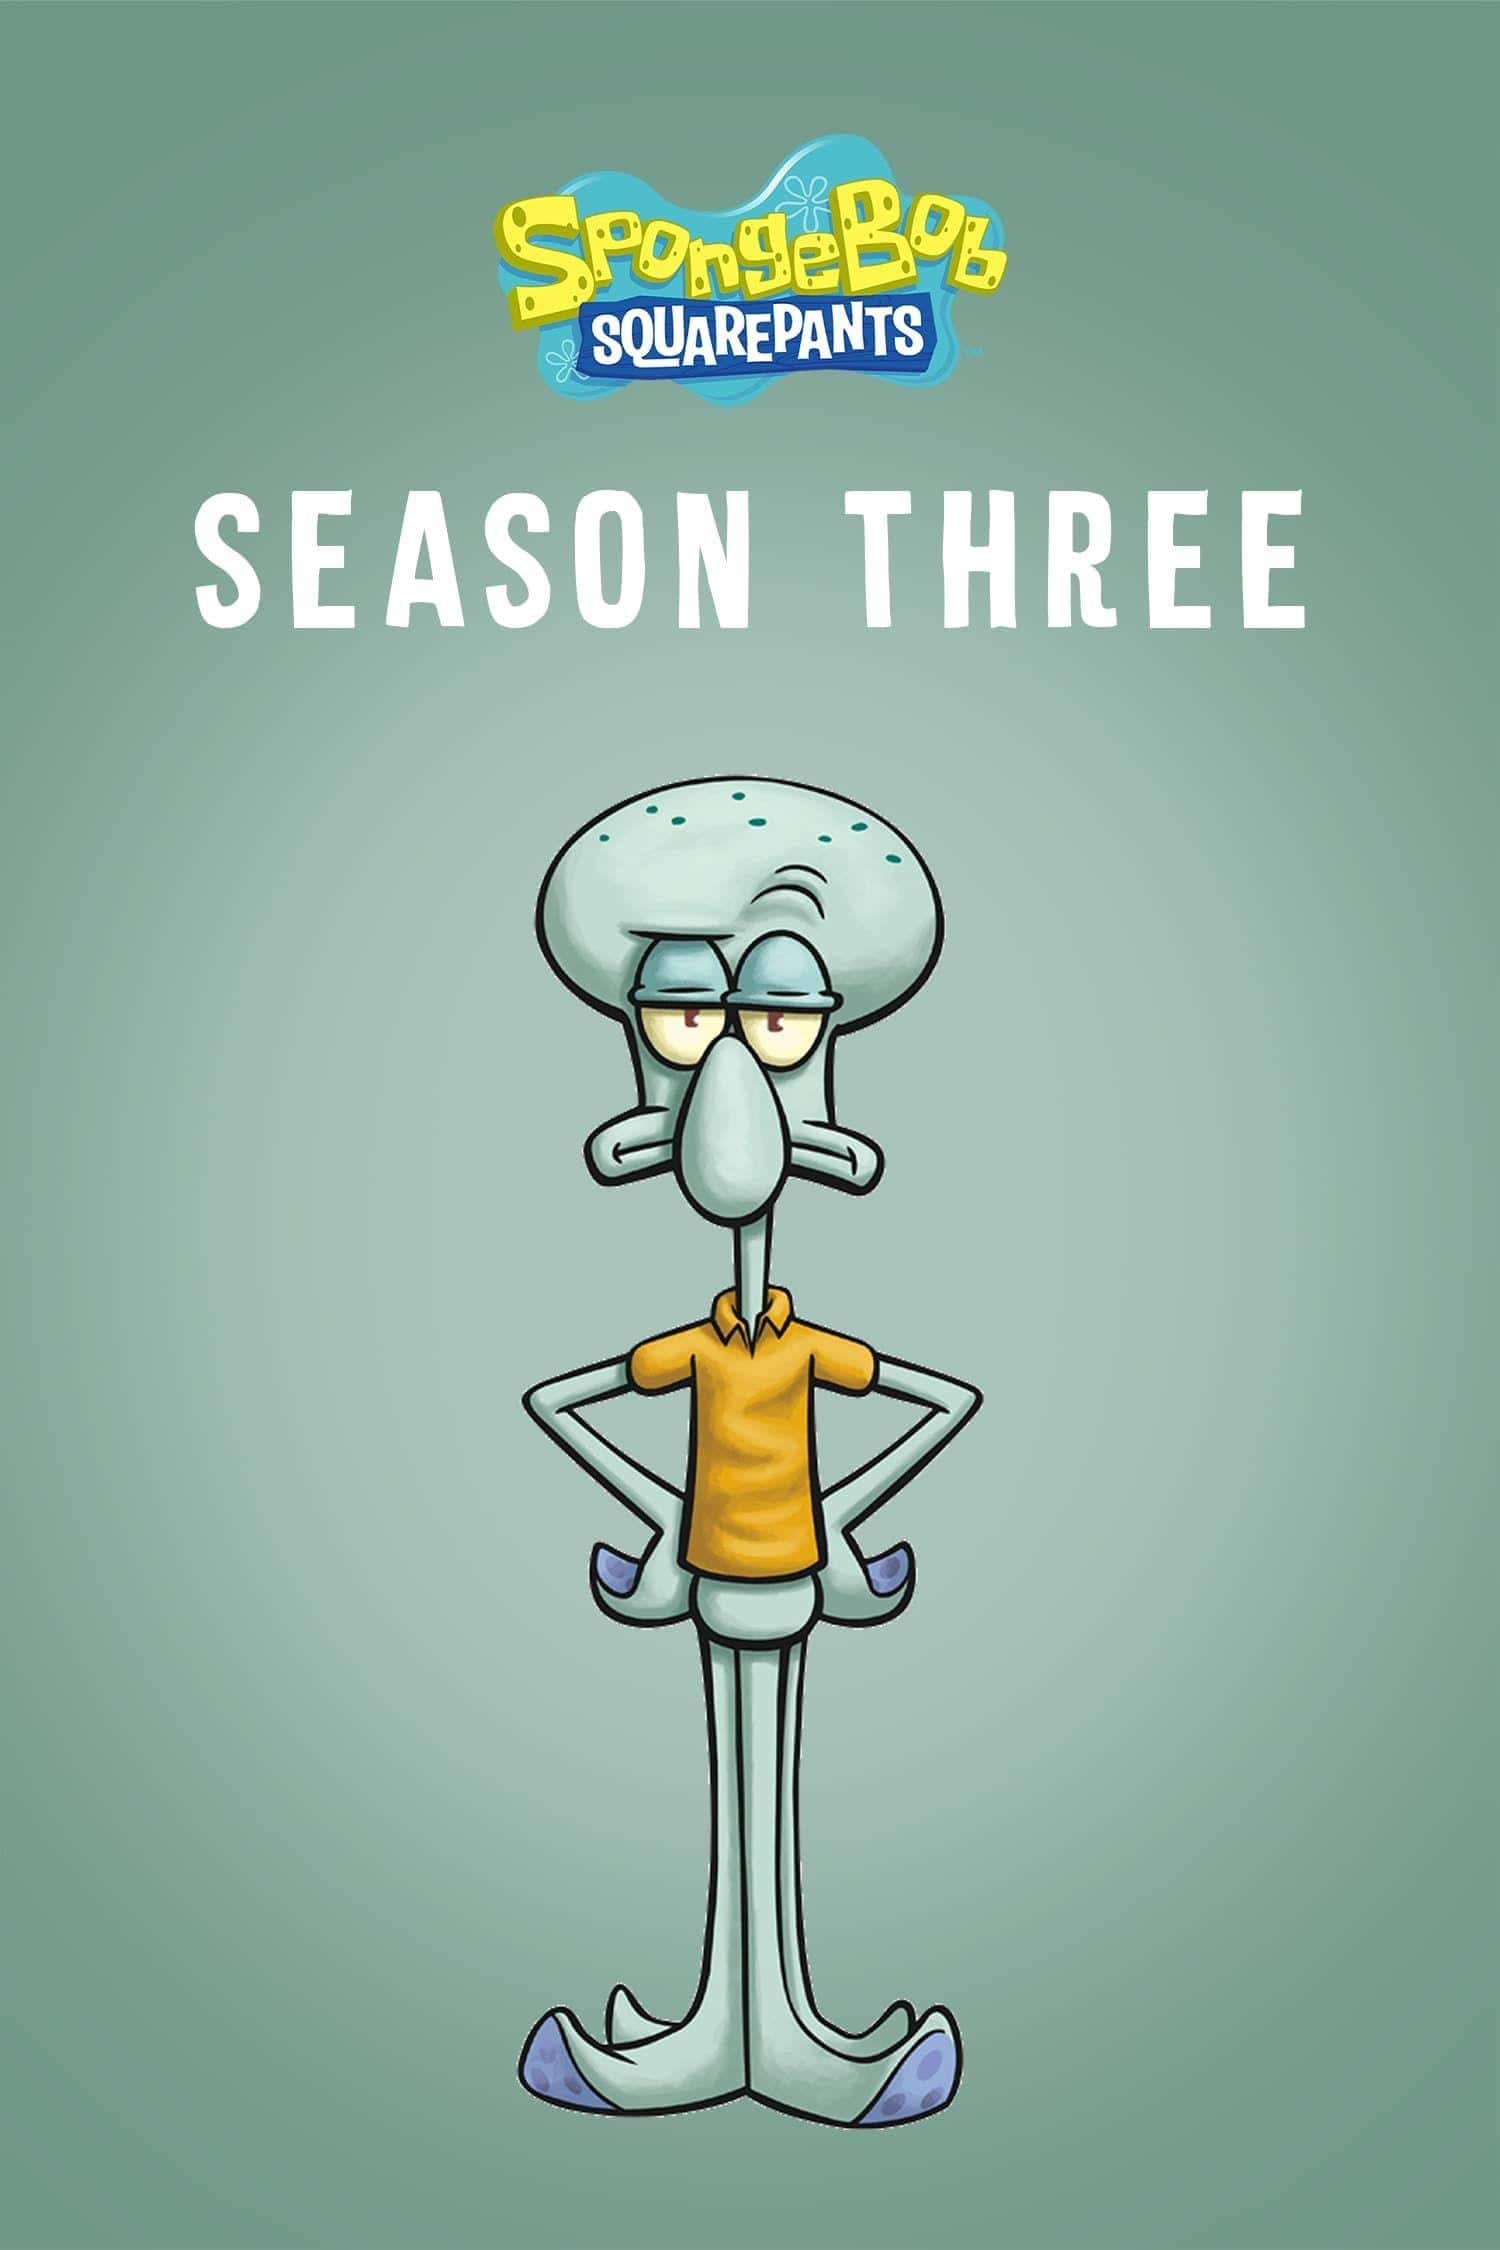 spongebob season 9 episode 13